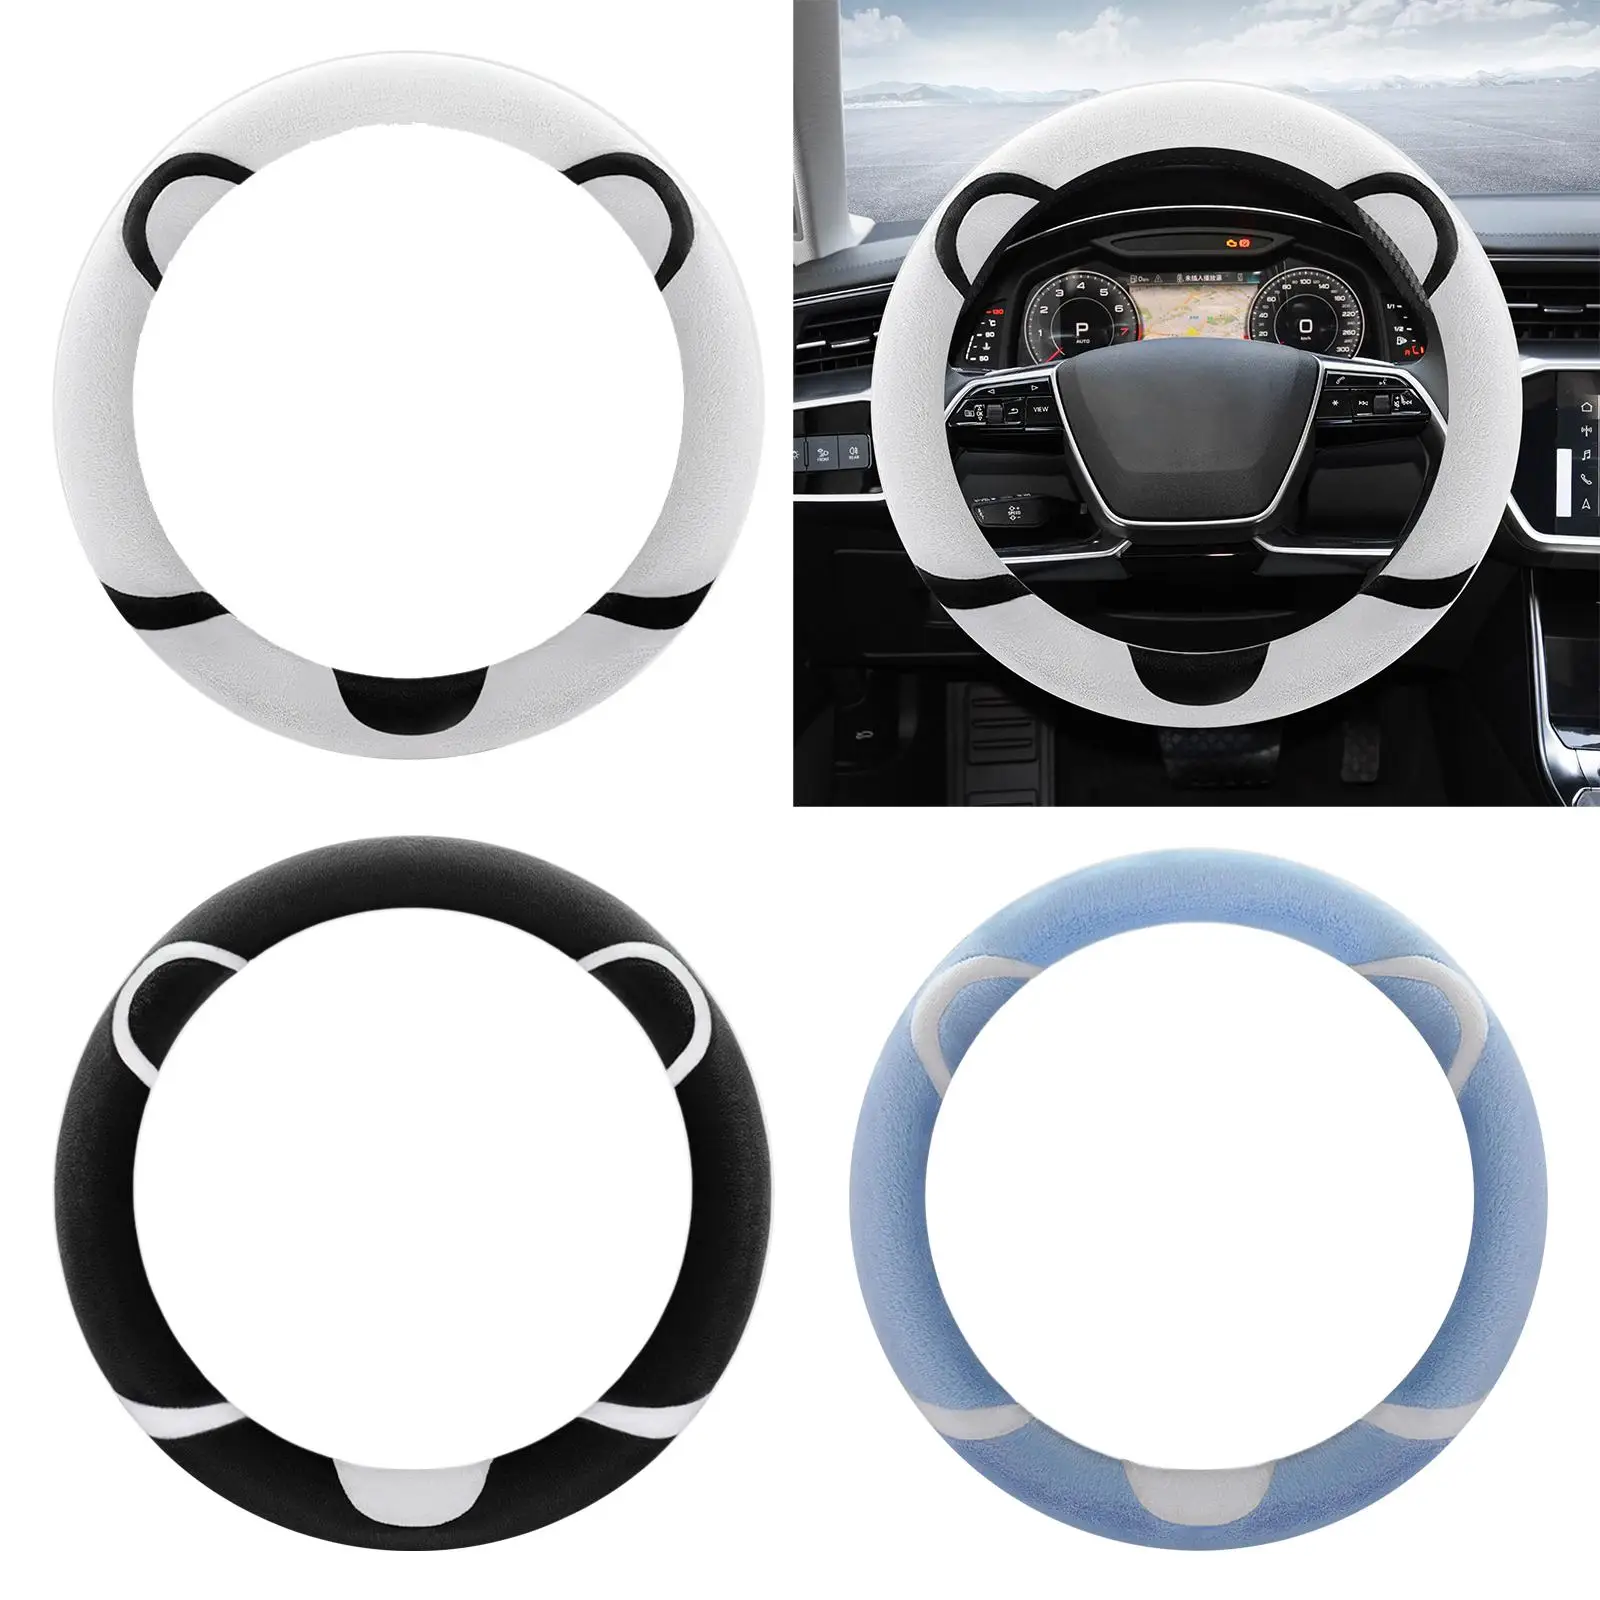 Car Steering Wheel Cover Interior Decoration Anti Slip Protective Cover